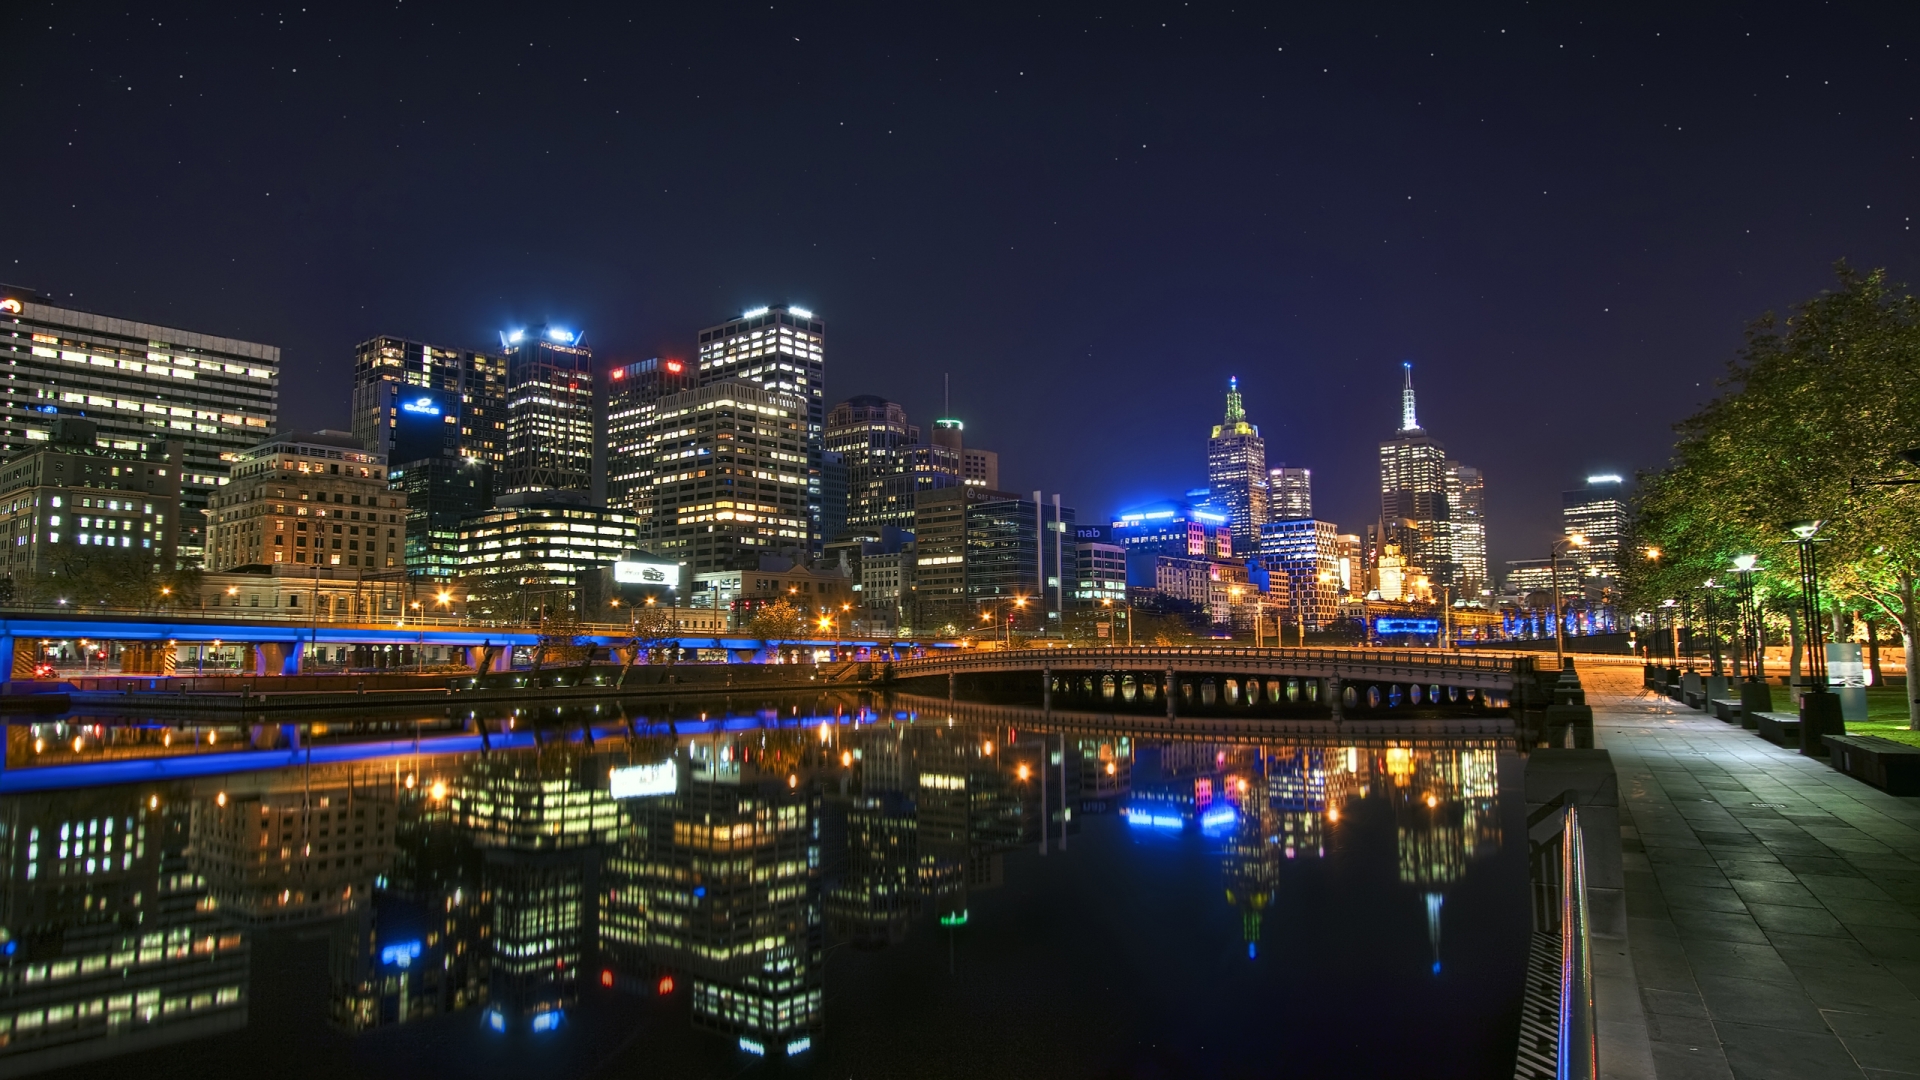 Melbourne Night Landscape for 1920 x 1080 HDTV 1080p resolution